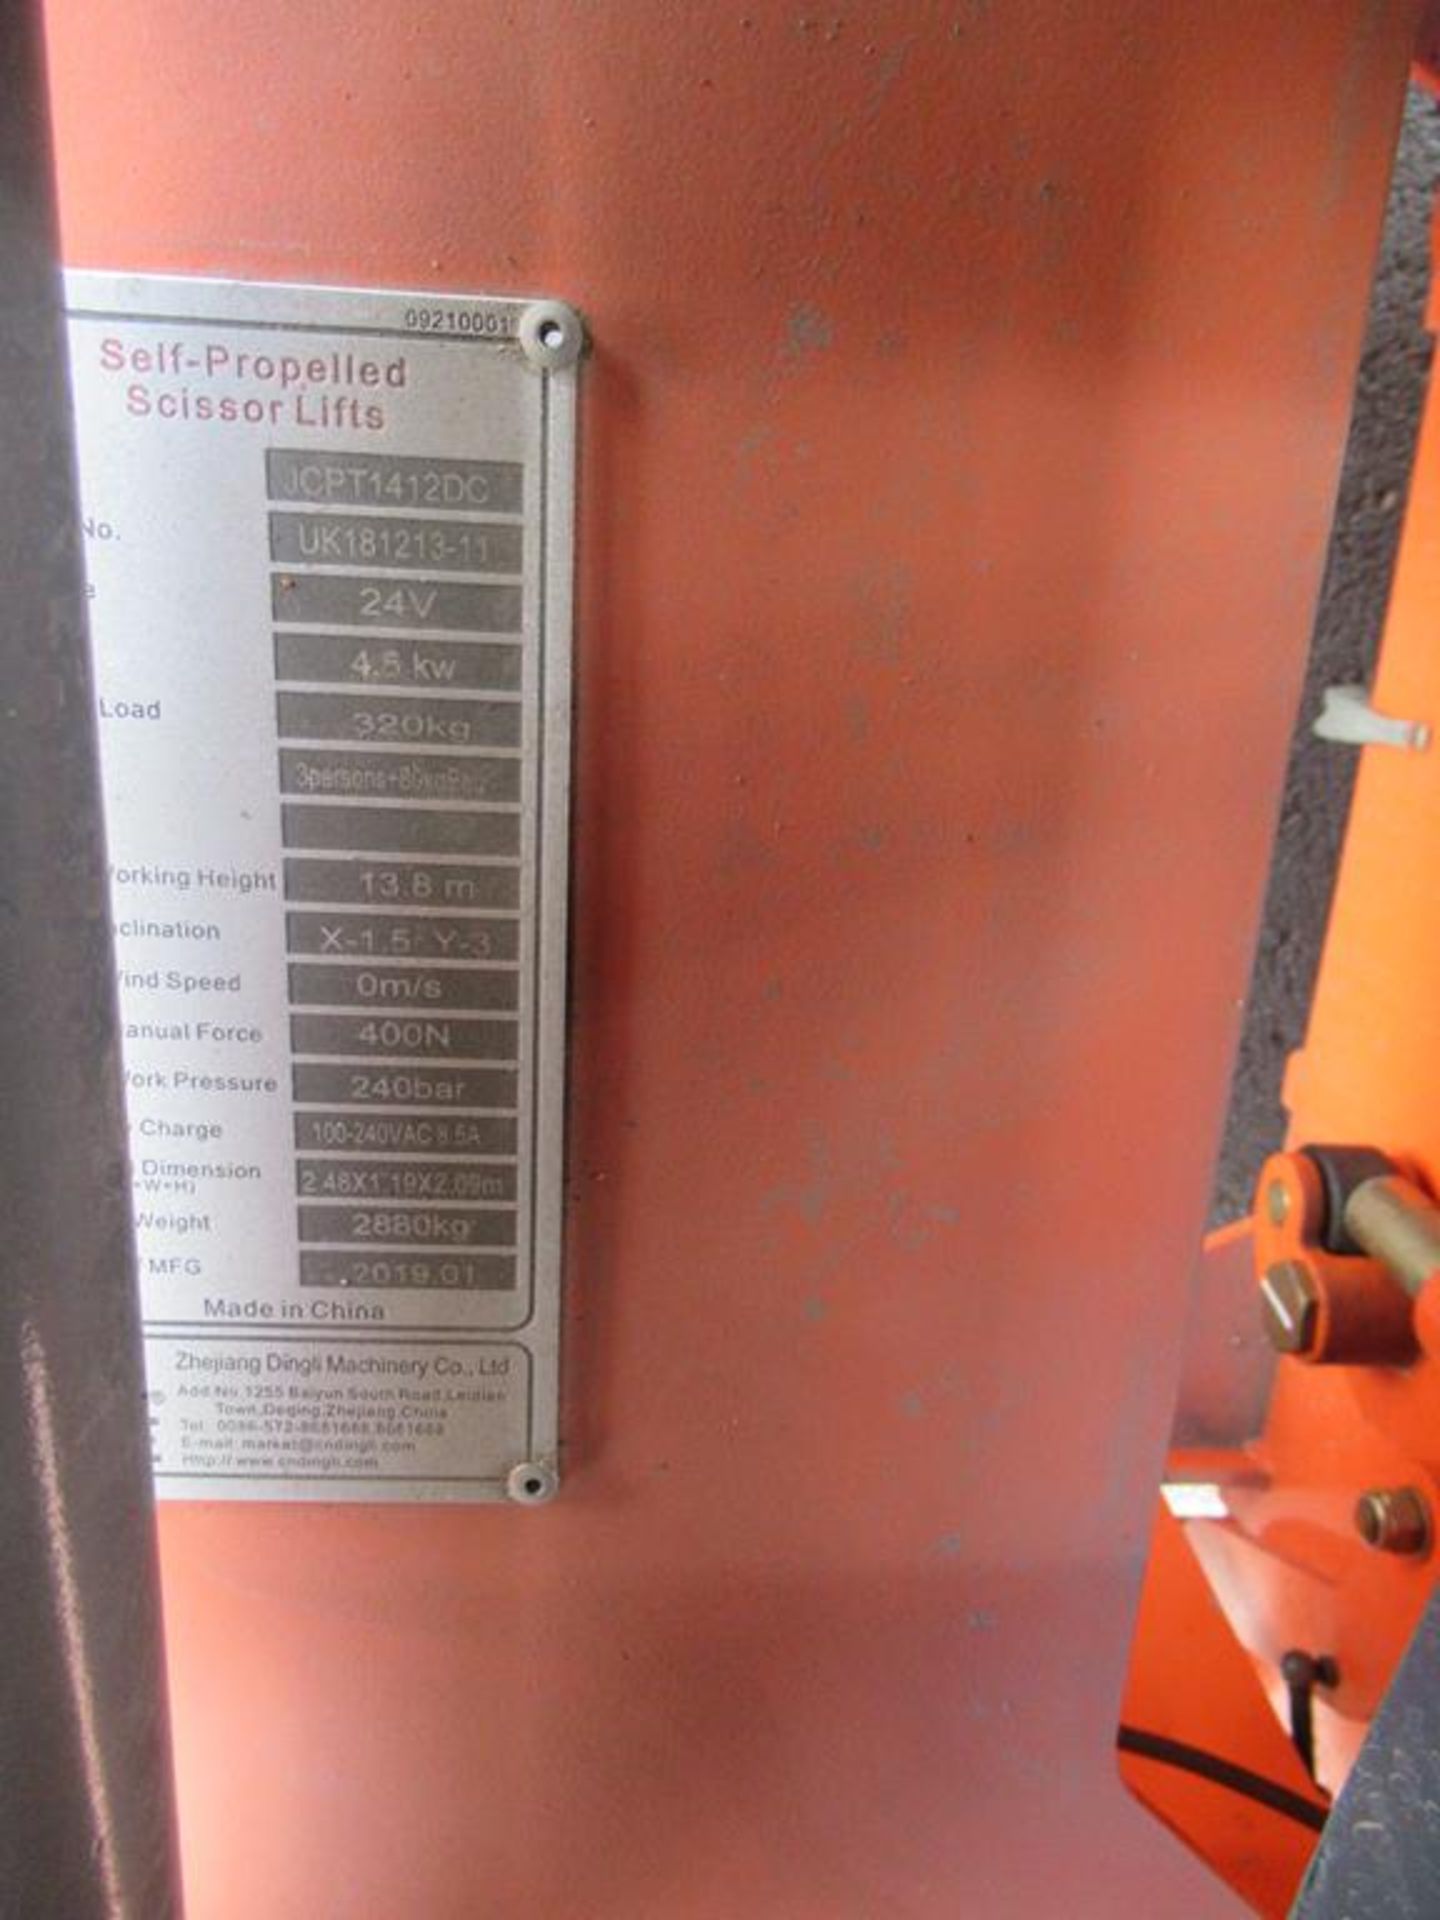 Dingli JCPT 1412 DC 24V electric scissor lift - Image 5 of 7